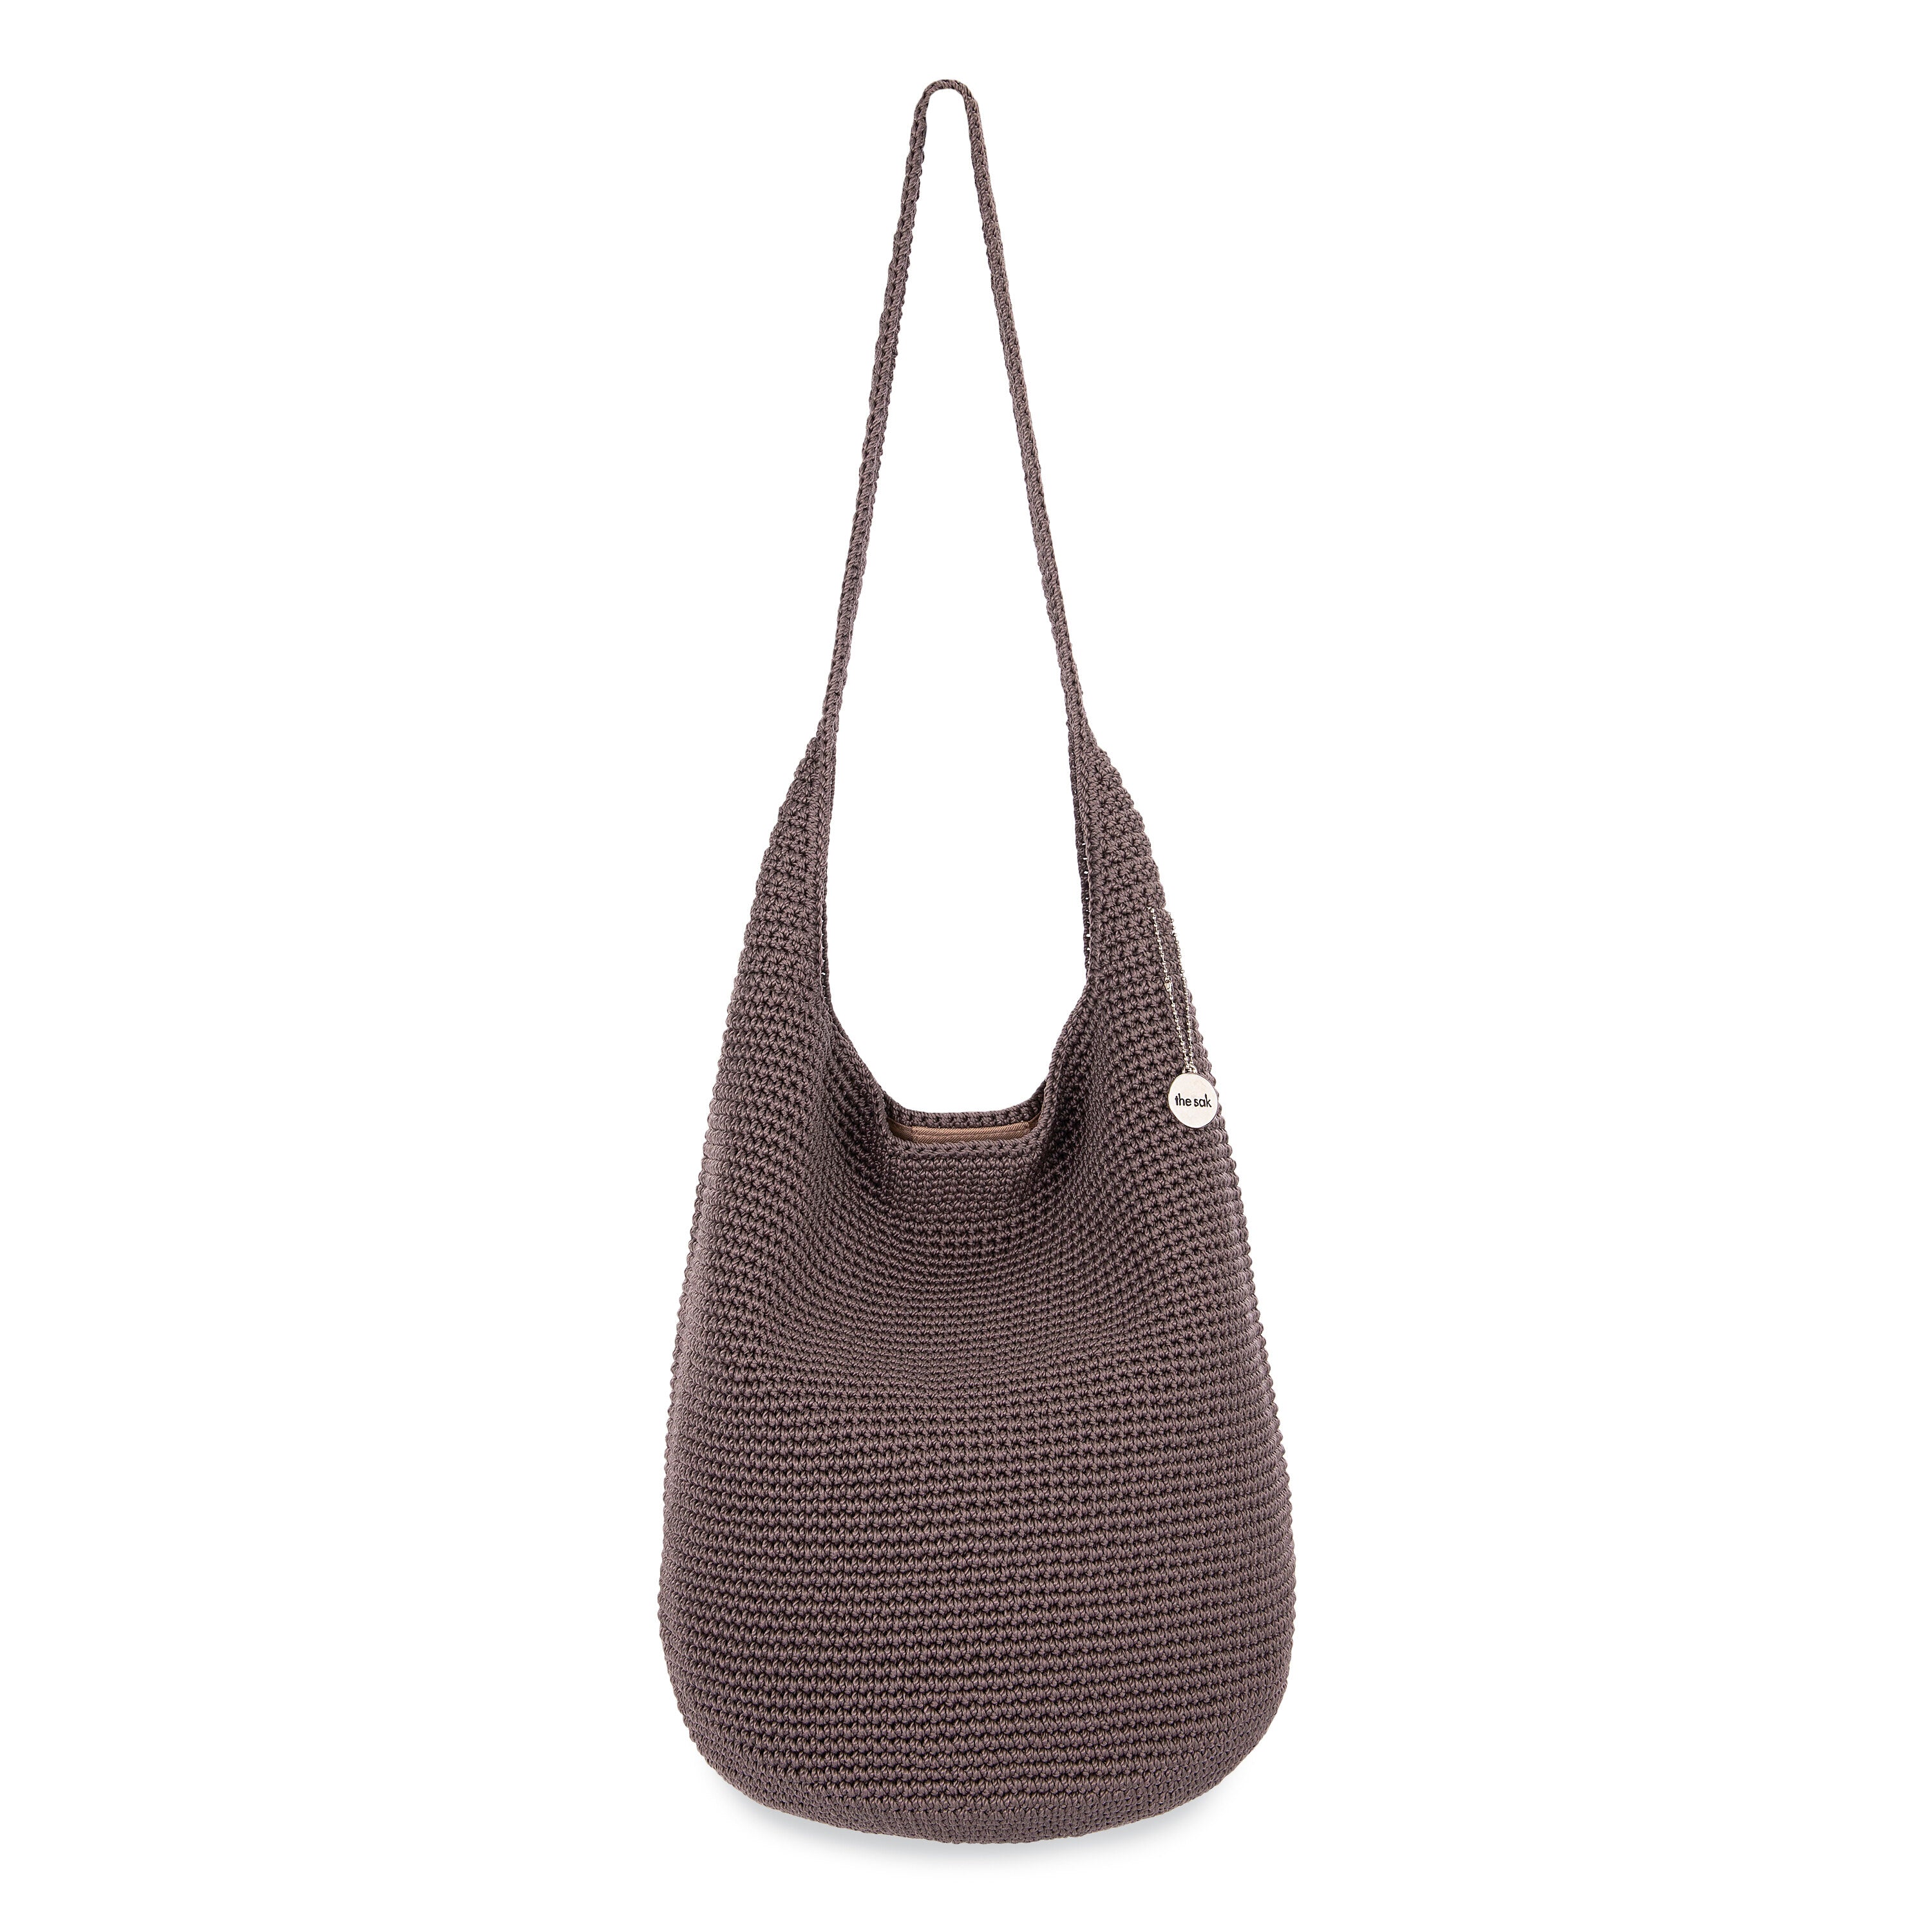 The Sak Jasmine Small Leather Hobo Bag